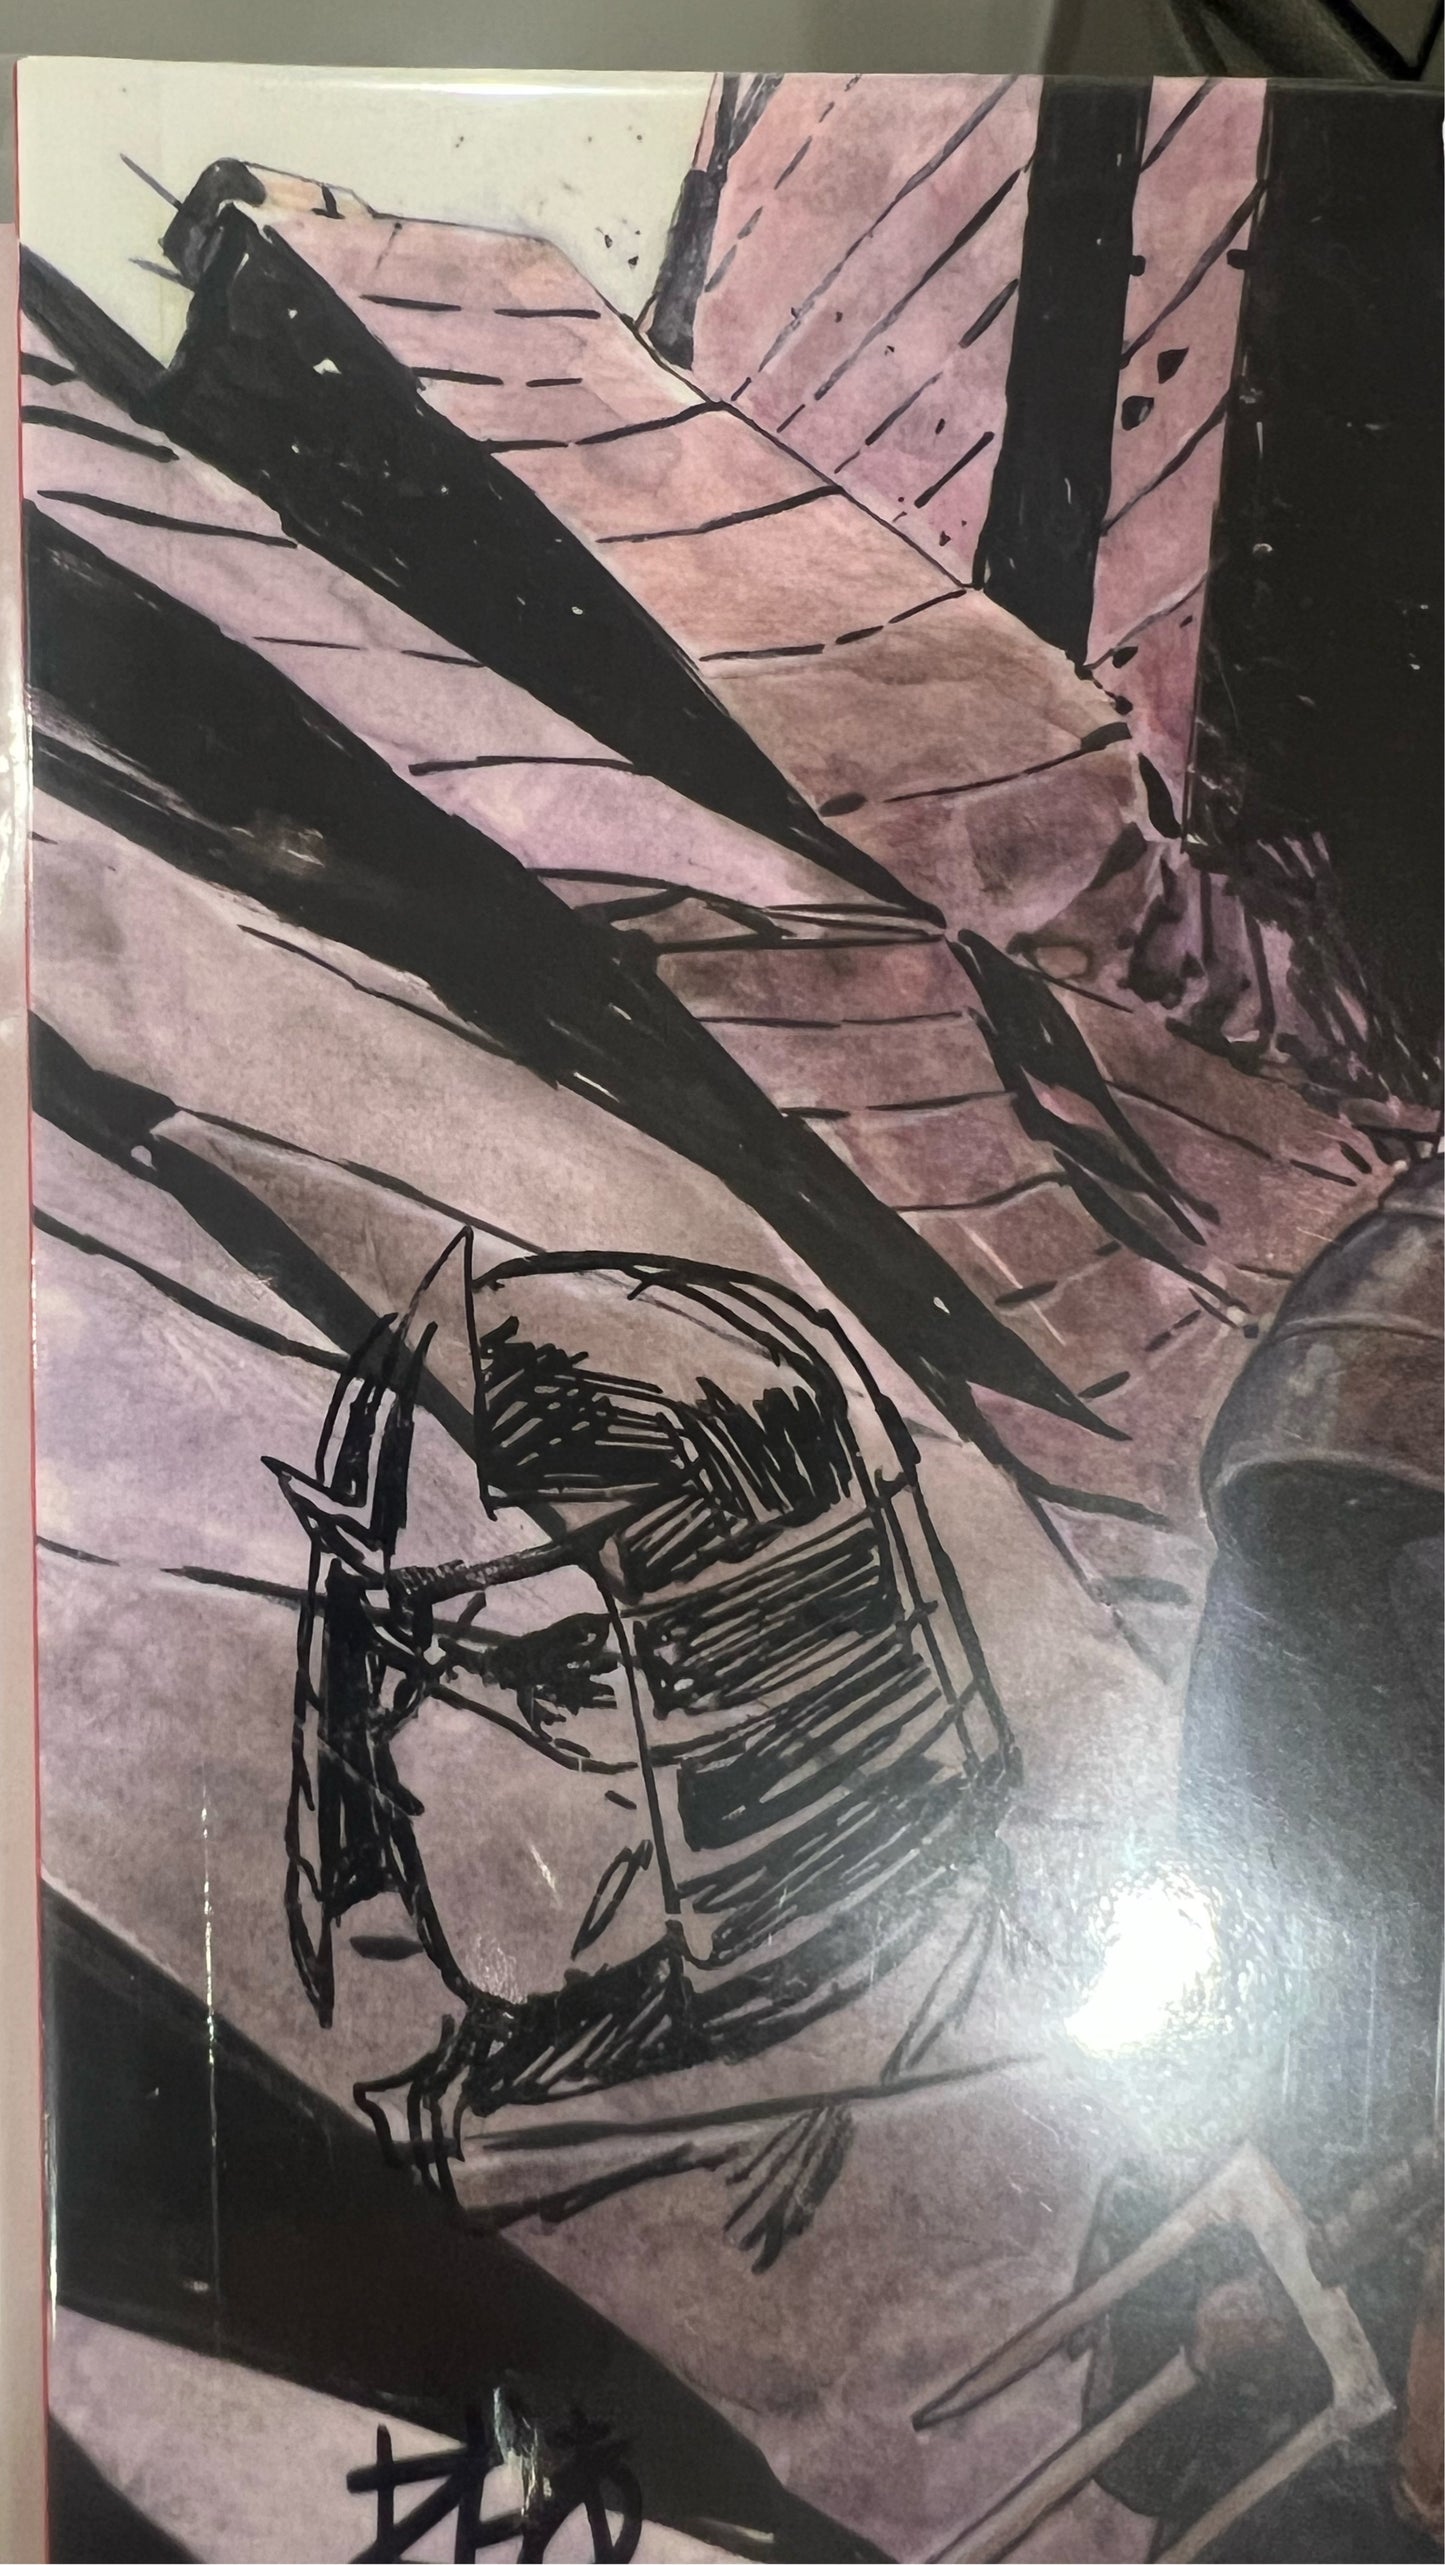 Teenage Mutant Ninja Turtles the Last Ronin #1 (Retailer Exclusive The Comics Vault Altoona Virgin Variant by Khoi Pham) Signed/Remarqued by Khoi Pham